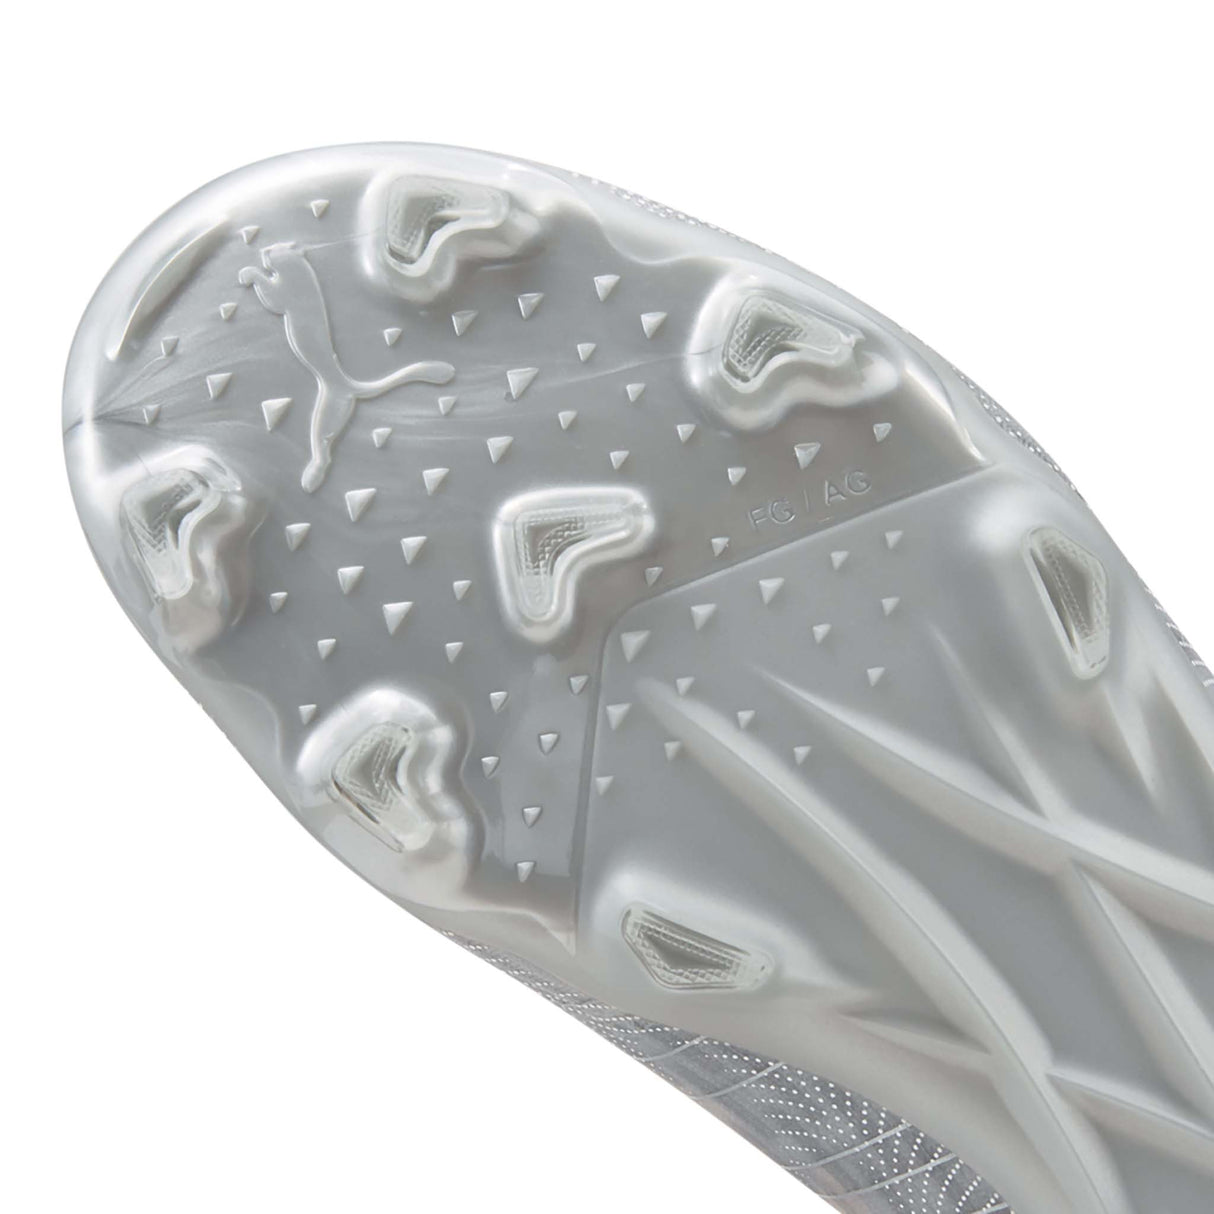 Puma Ultra 3.4 FG/AG souliers de soccer junior diamond silver neon citrus detail crampons